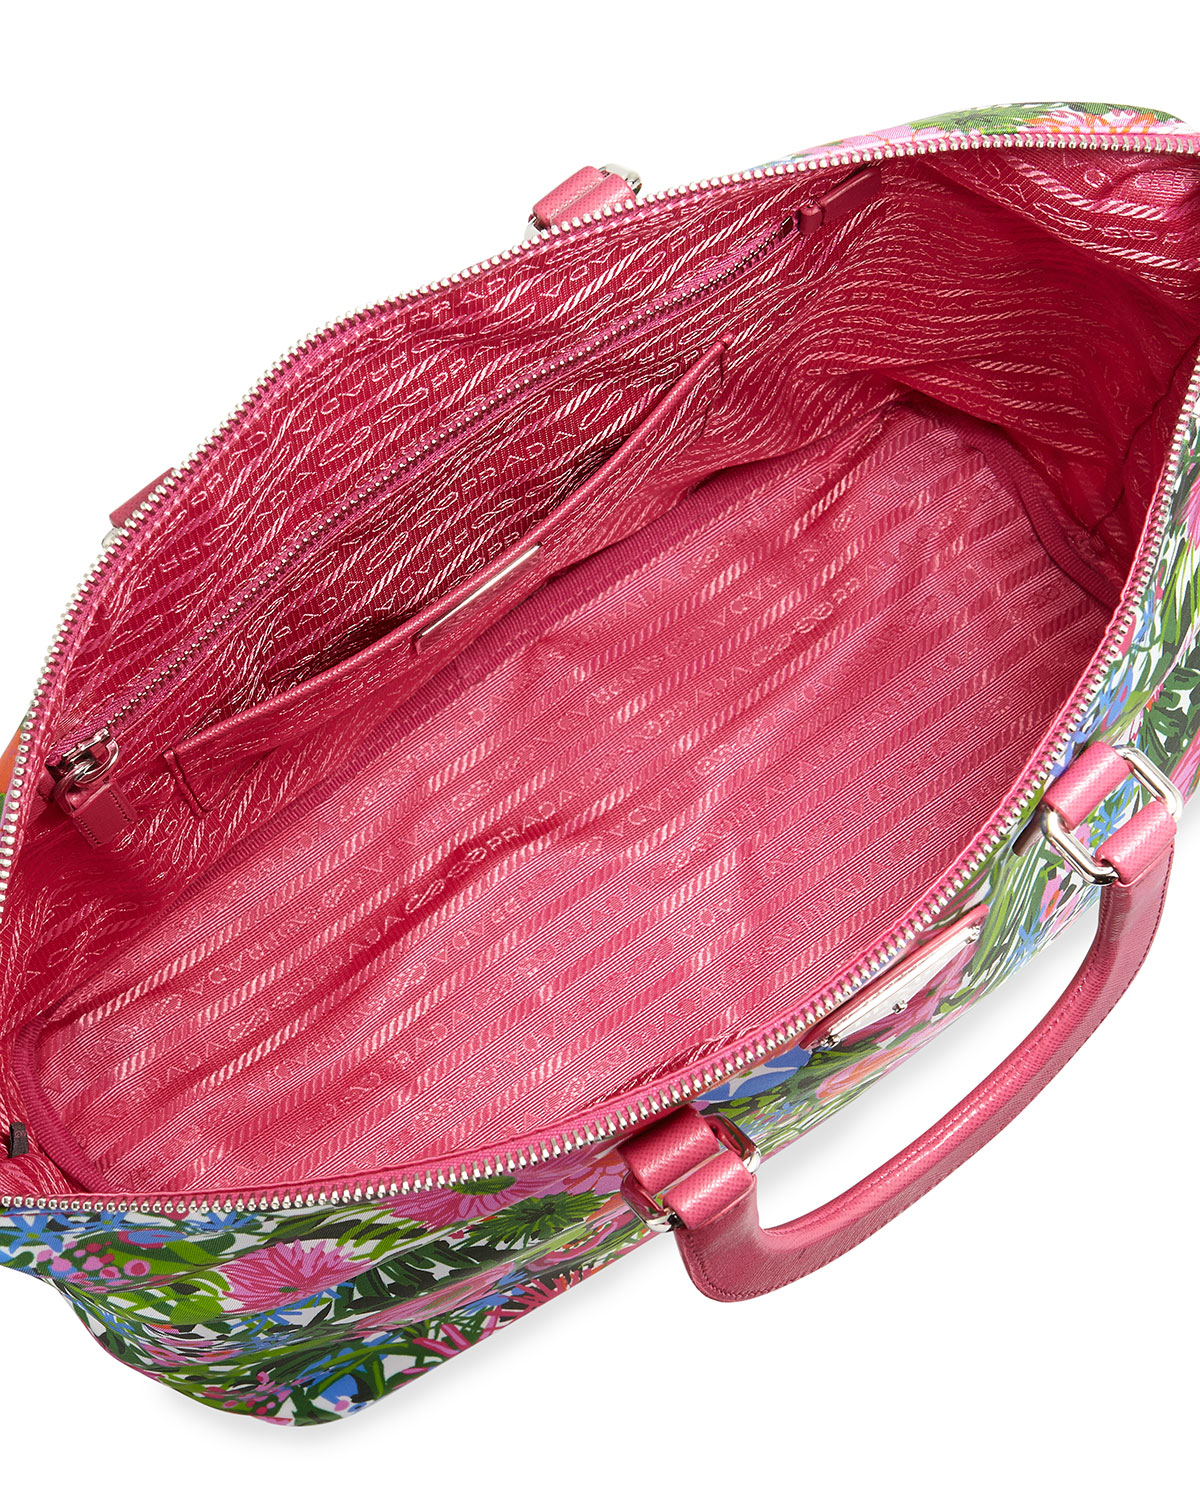 Prada Floral-Print Nylon Tote Bag in Pink (PINK FLORAL) | Lyst  